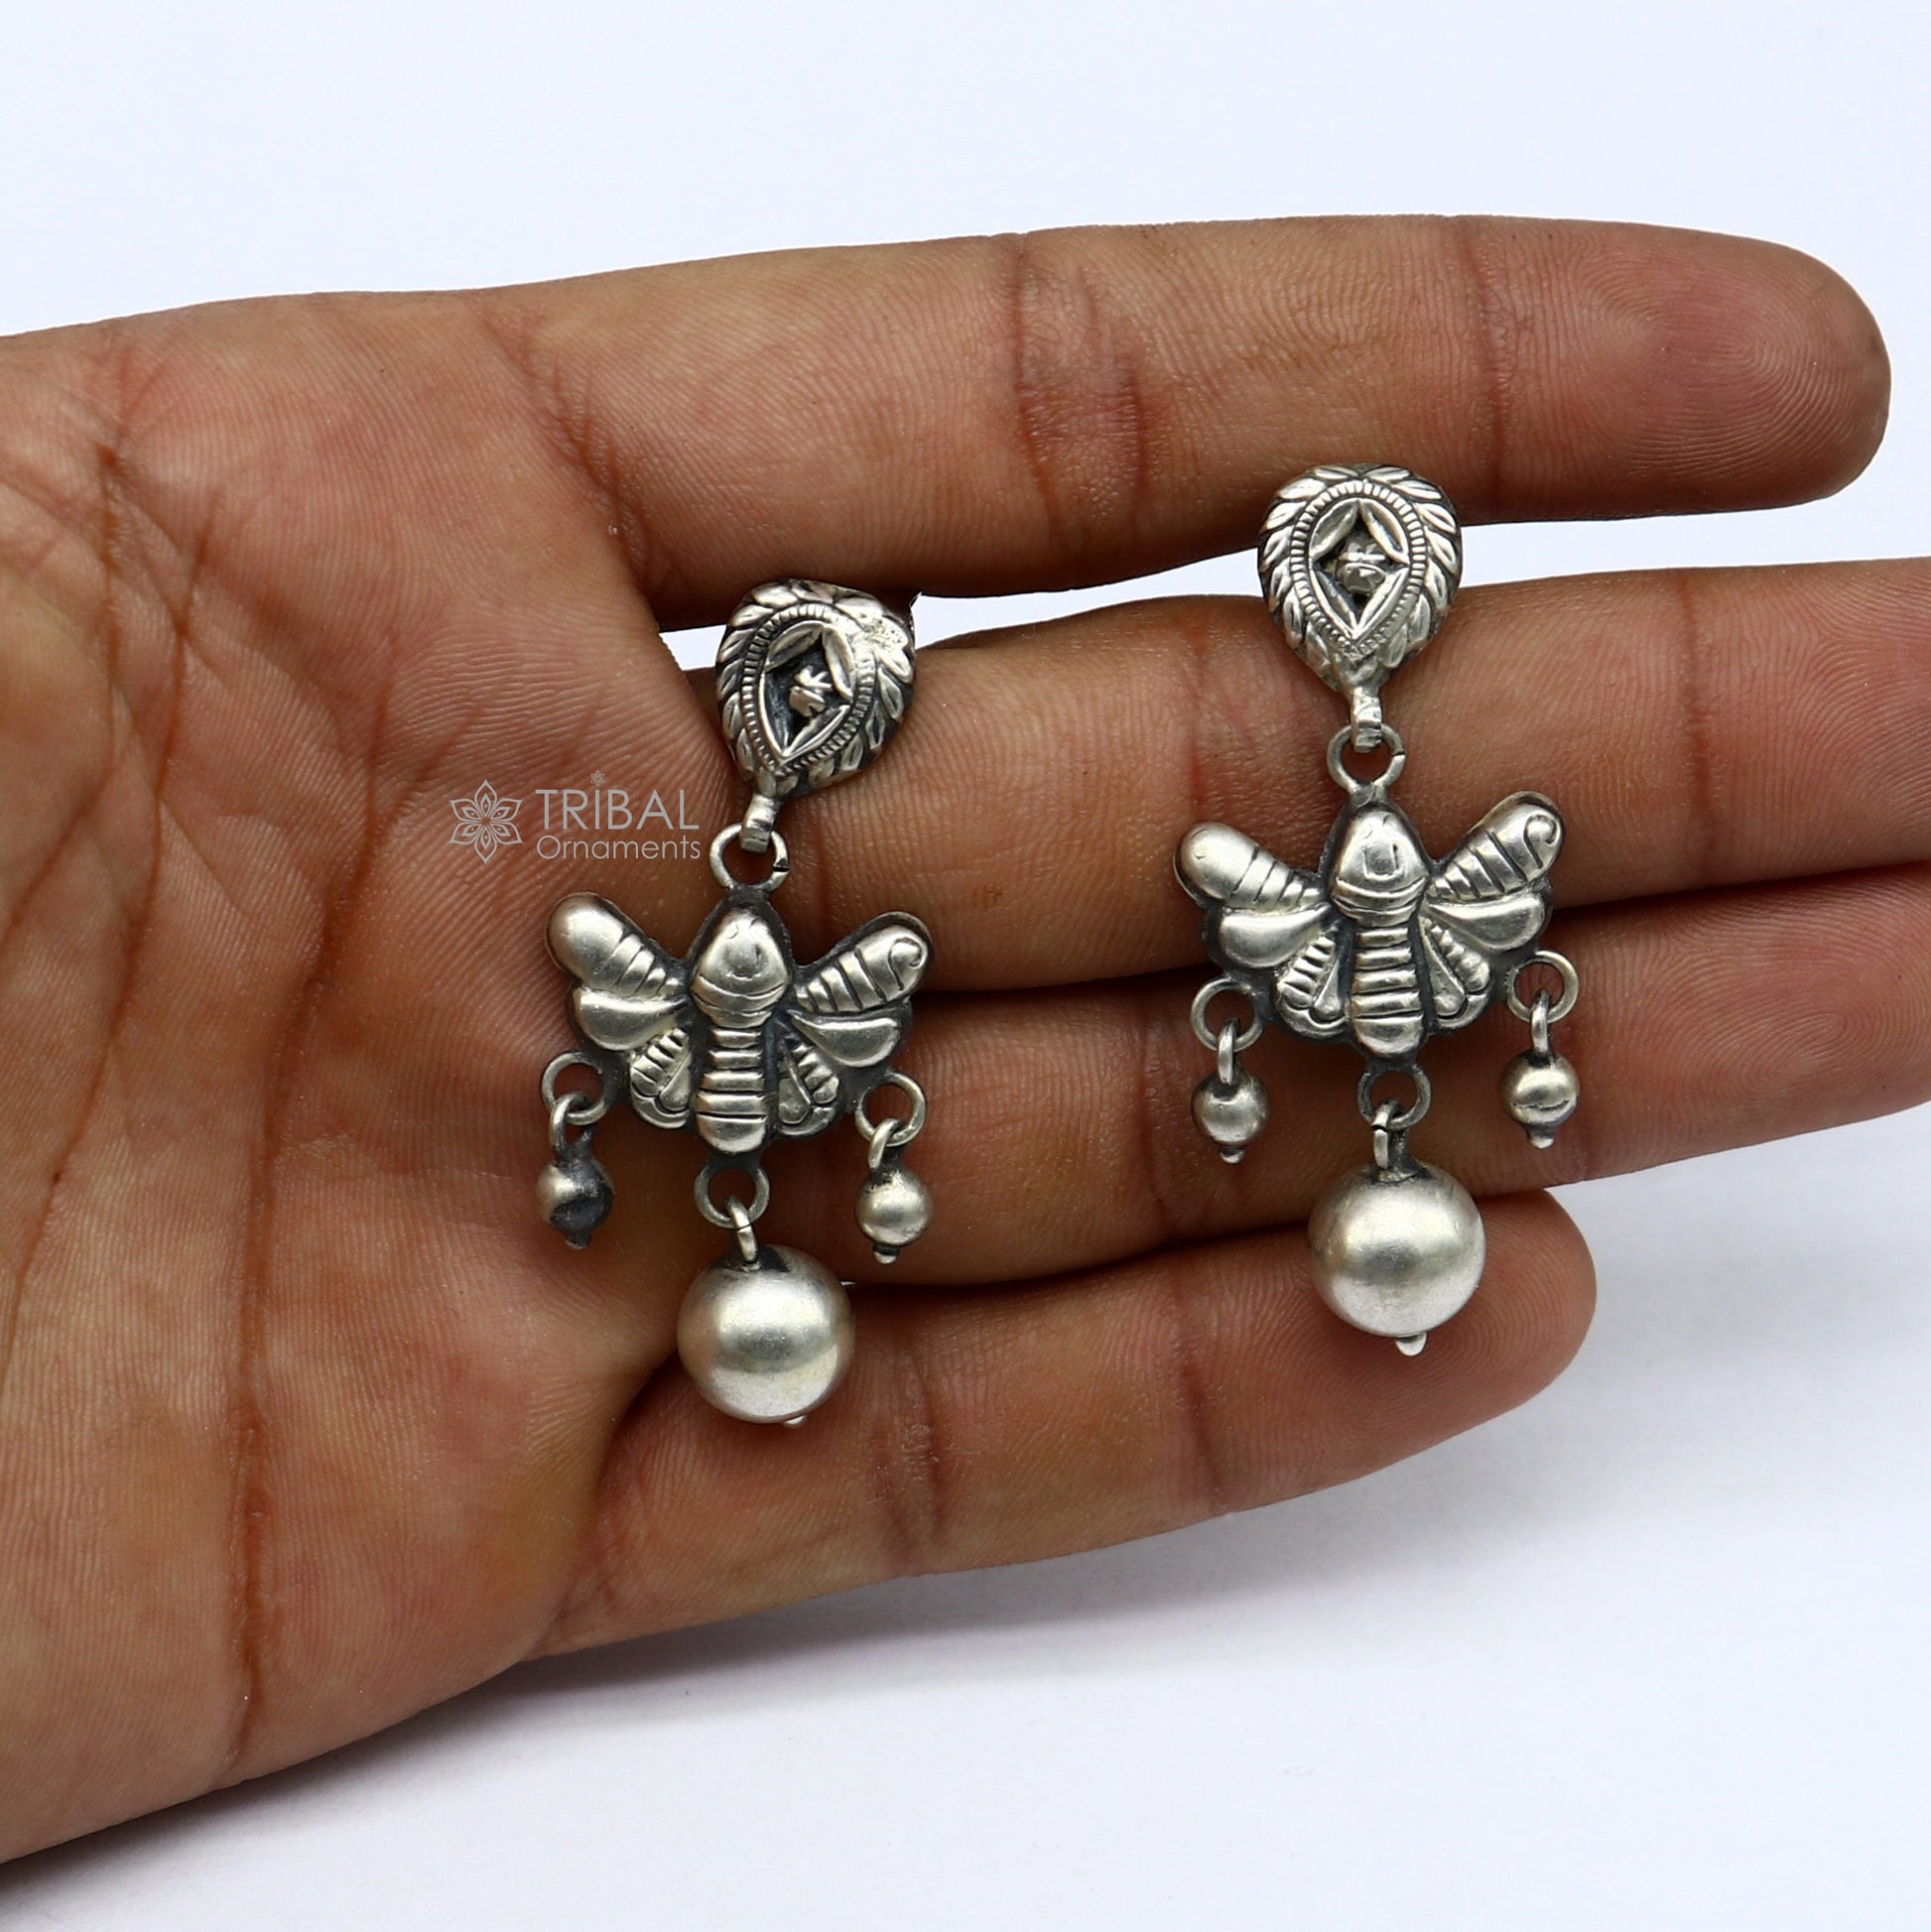 925 sterling silver handmade fabulous light weight Stud dangler earring, butterfly design excellent ethnic tribal functional Earrings s1246 - TRIBAL ORNAMENTS